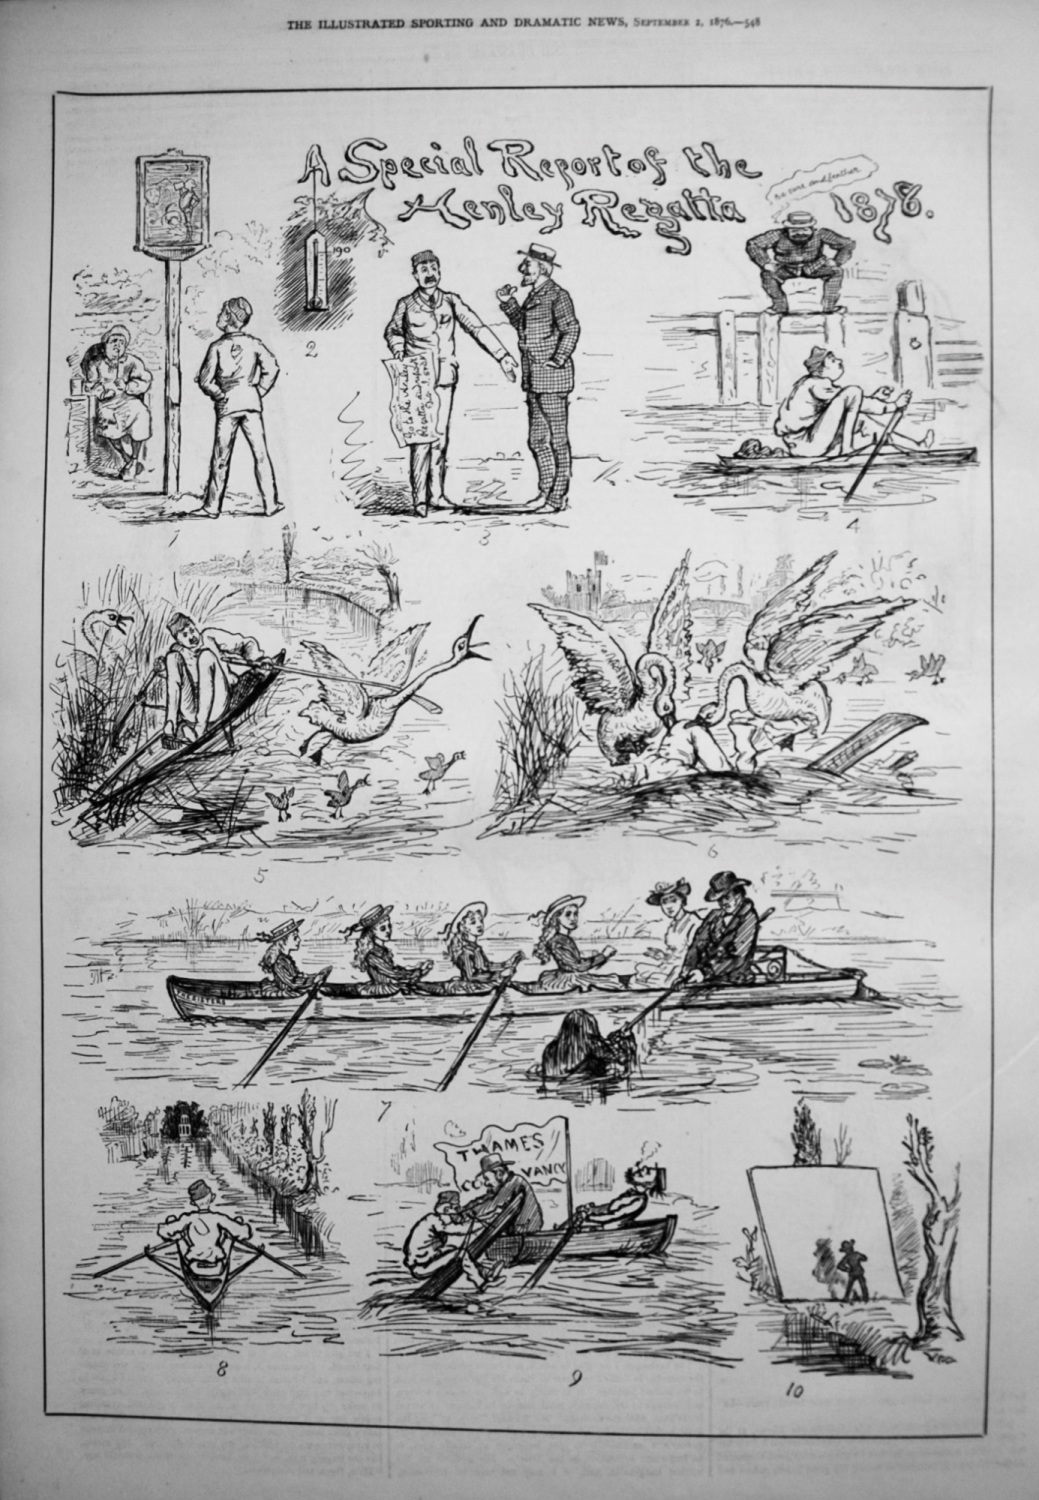 A Special Report of the Henley Regatta 1876.